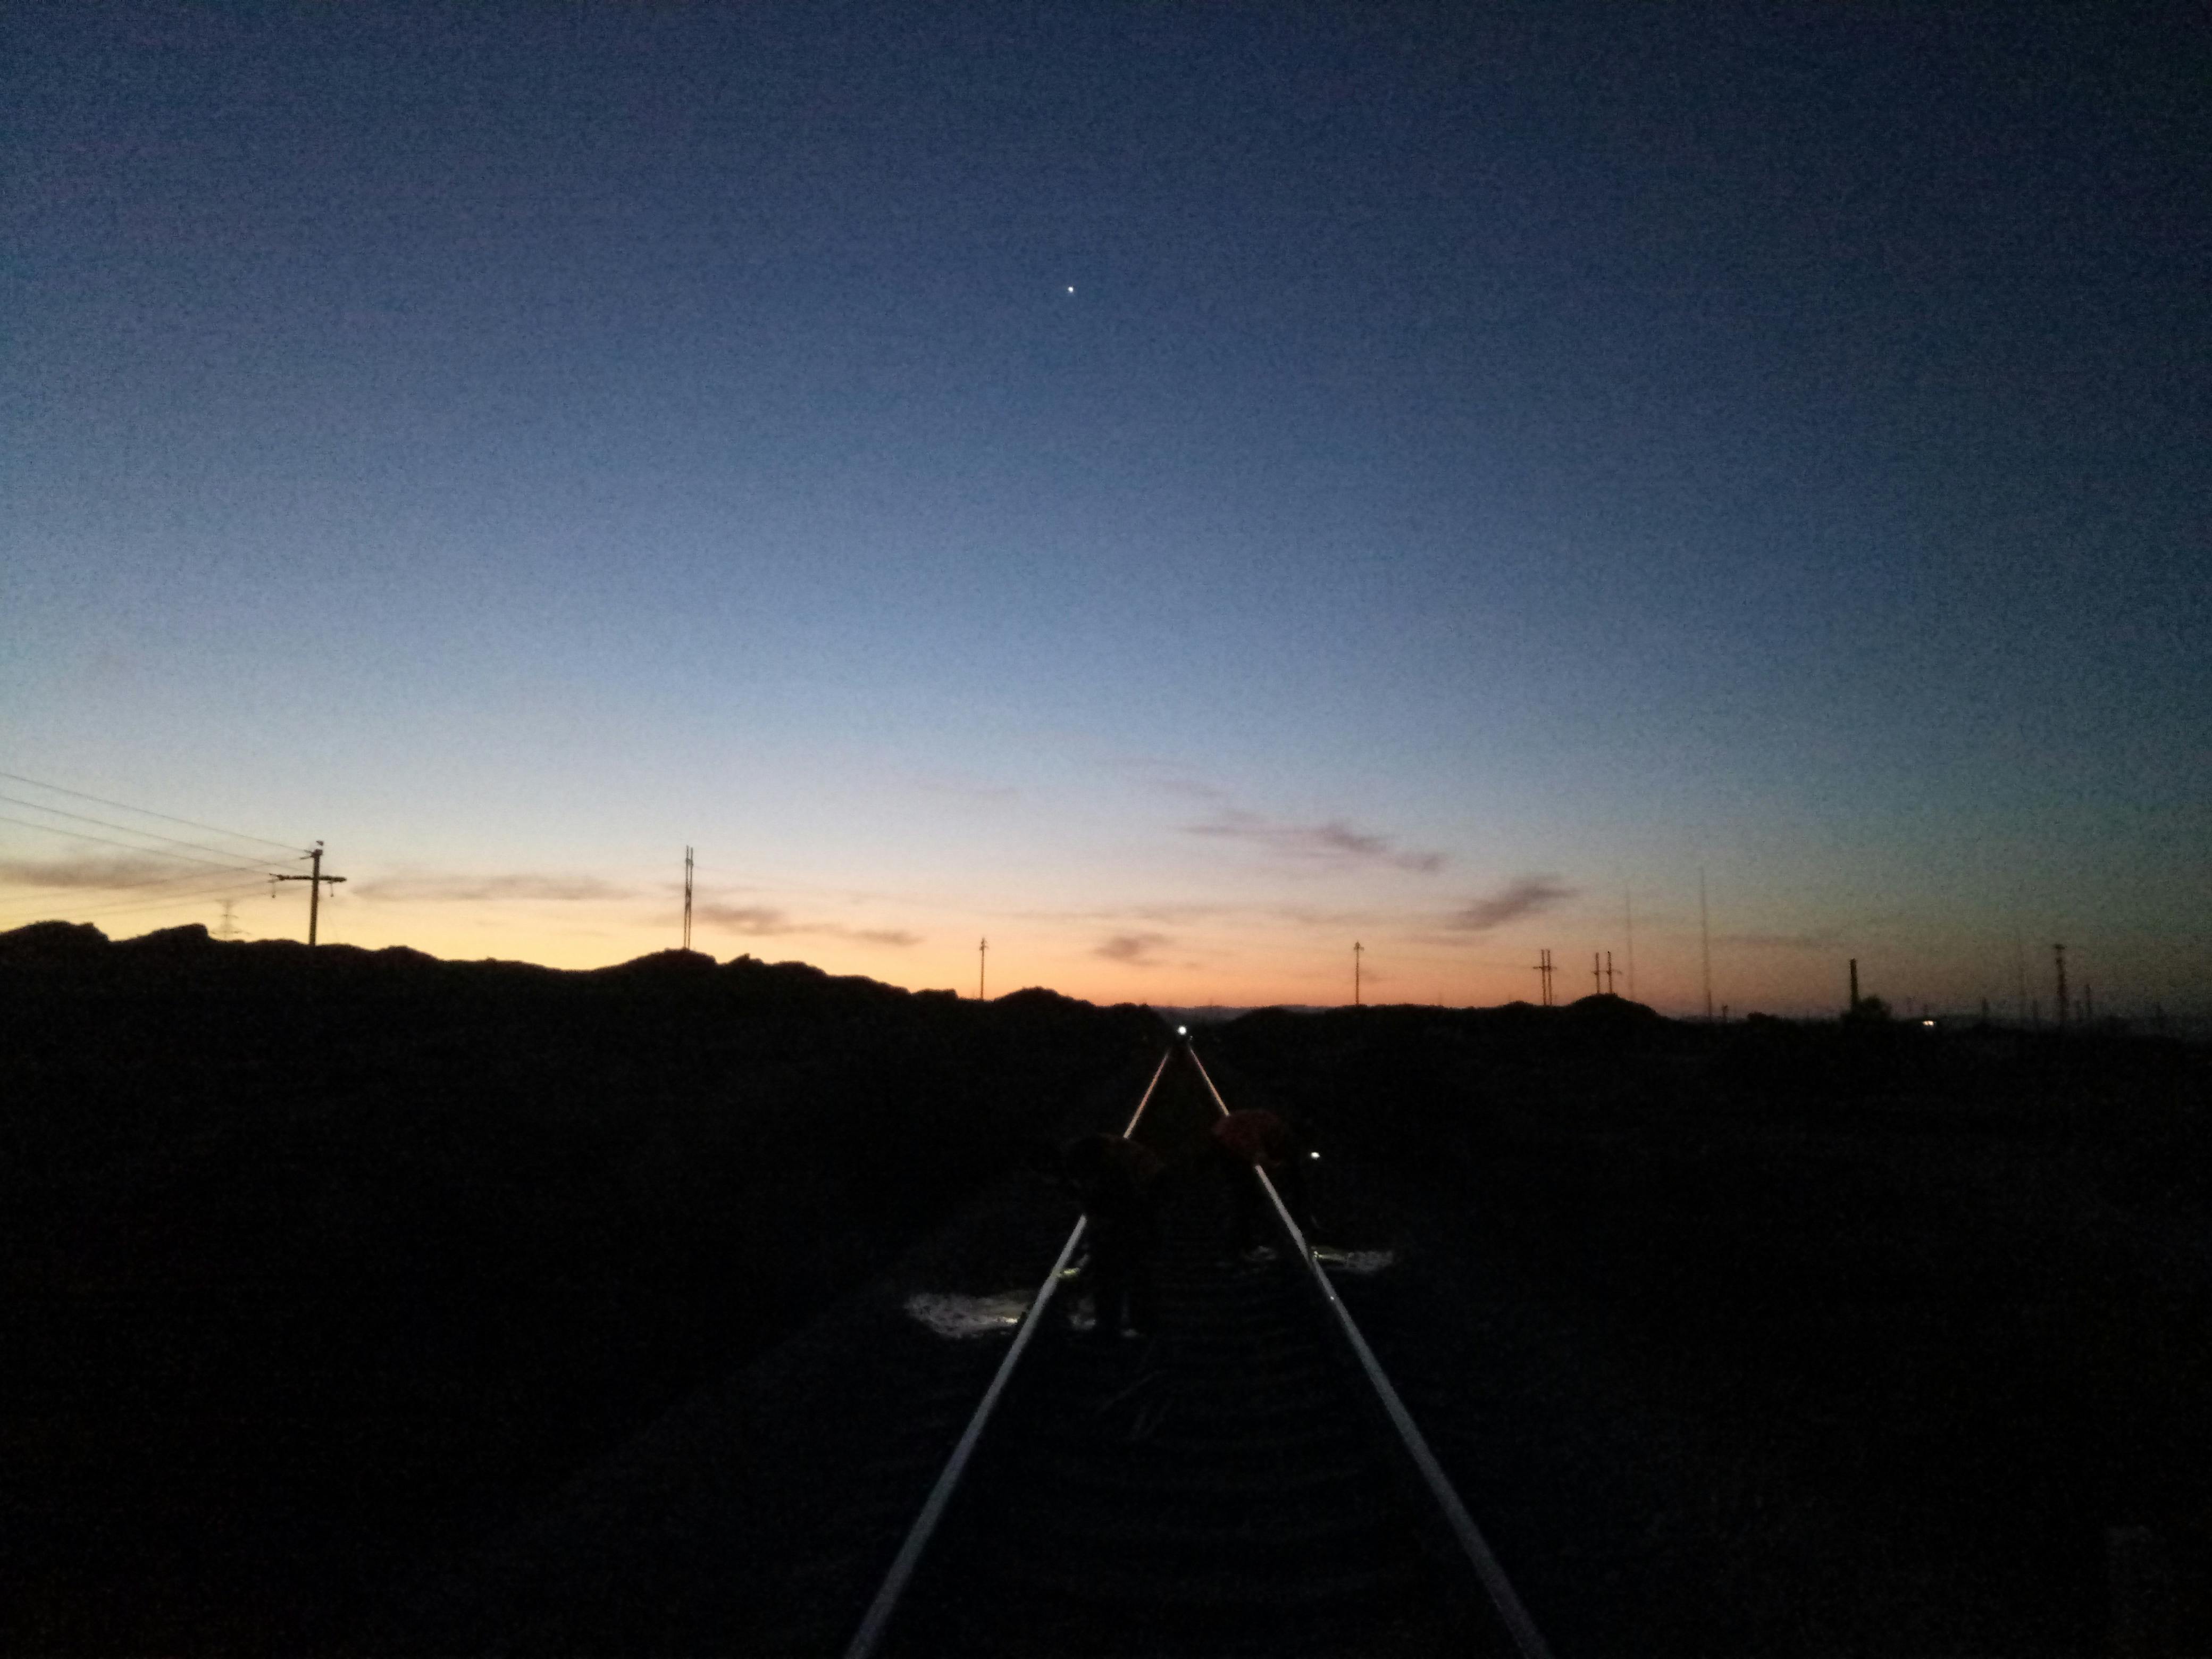 Free stock photo of railway setting sun